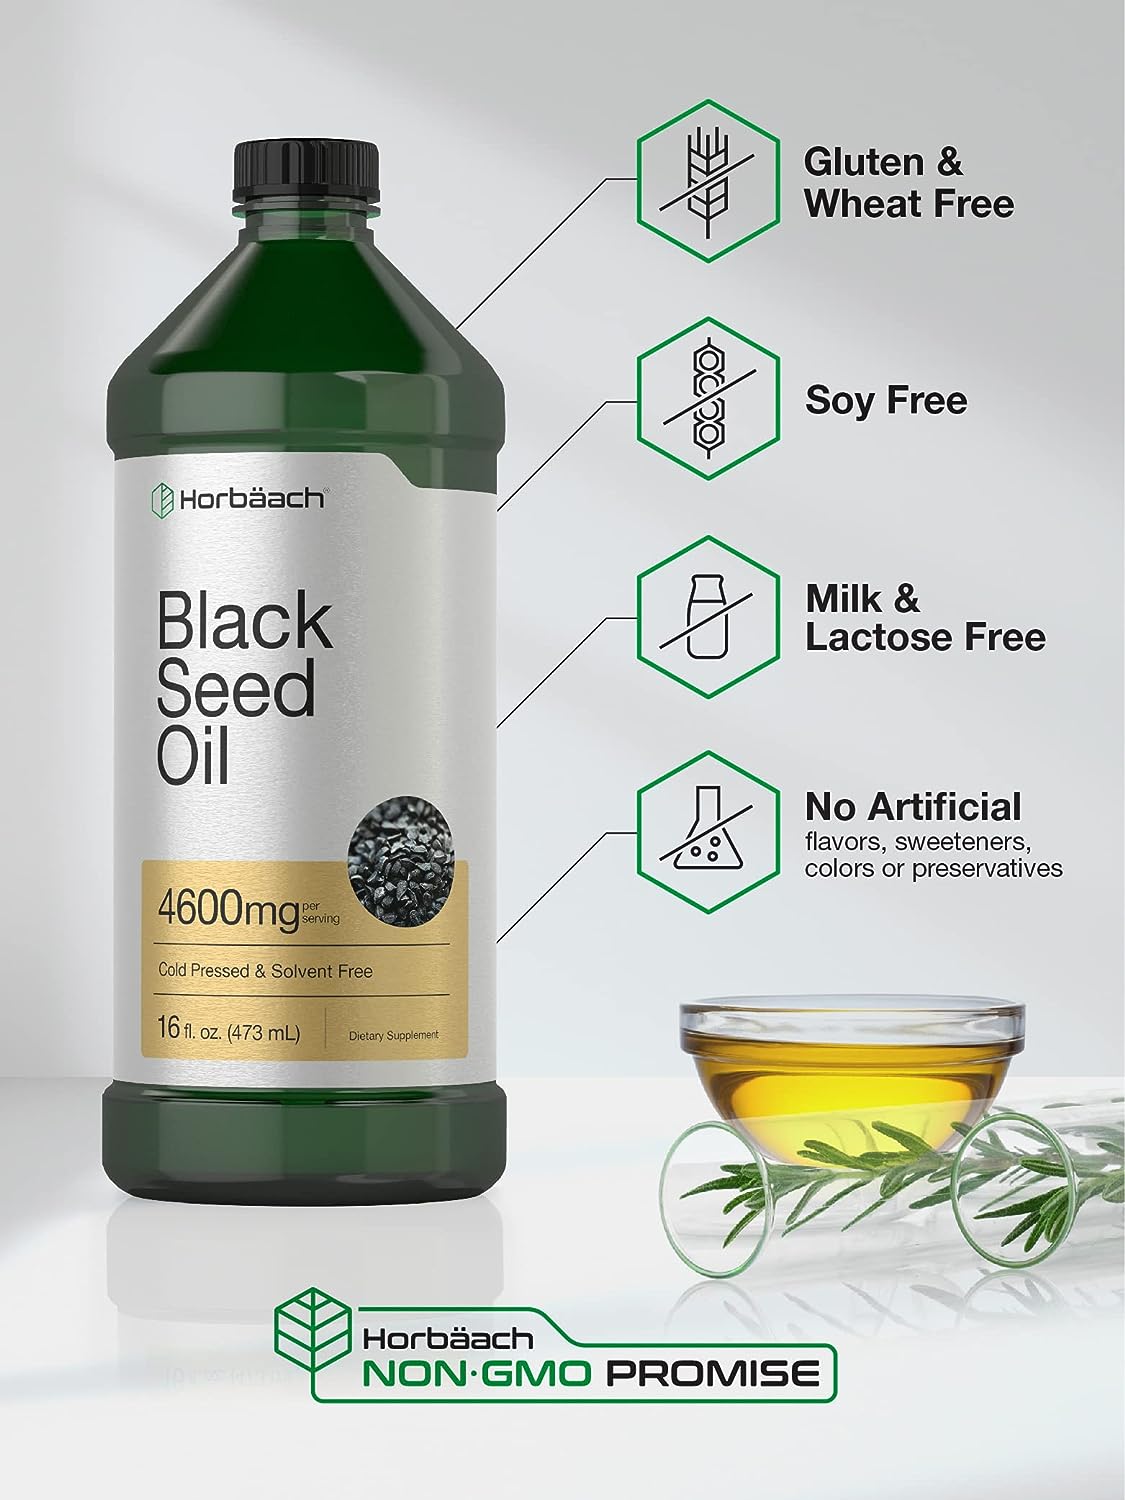 Horbaach Black Seed Oil 4600Mg. 473Ml.